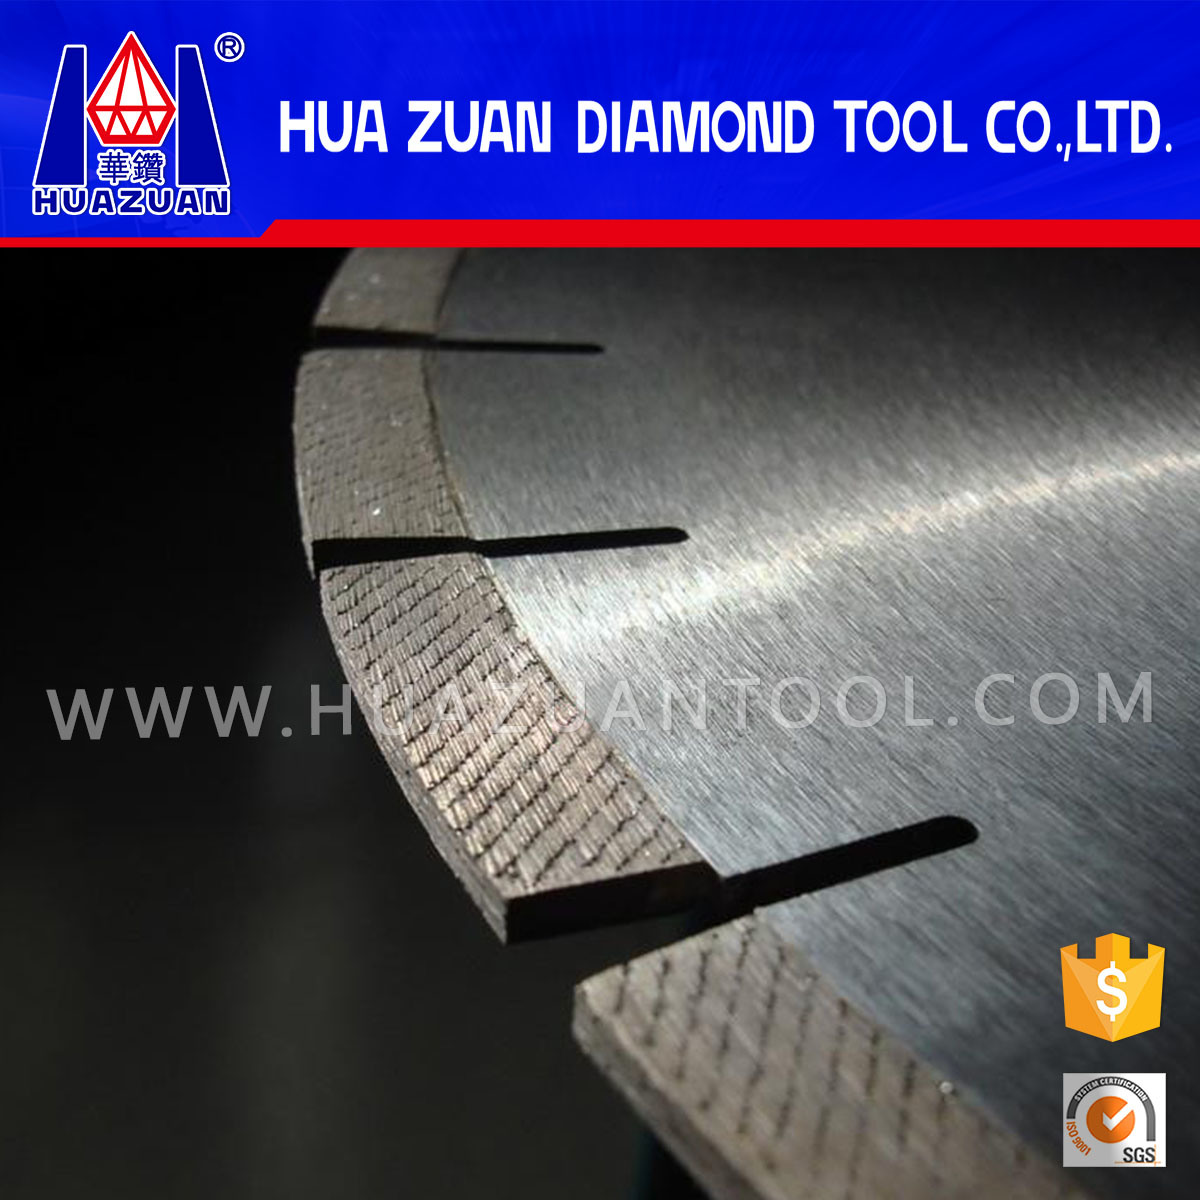 400mm Diamond Blade Arix for Stone Cutting